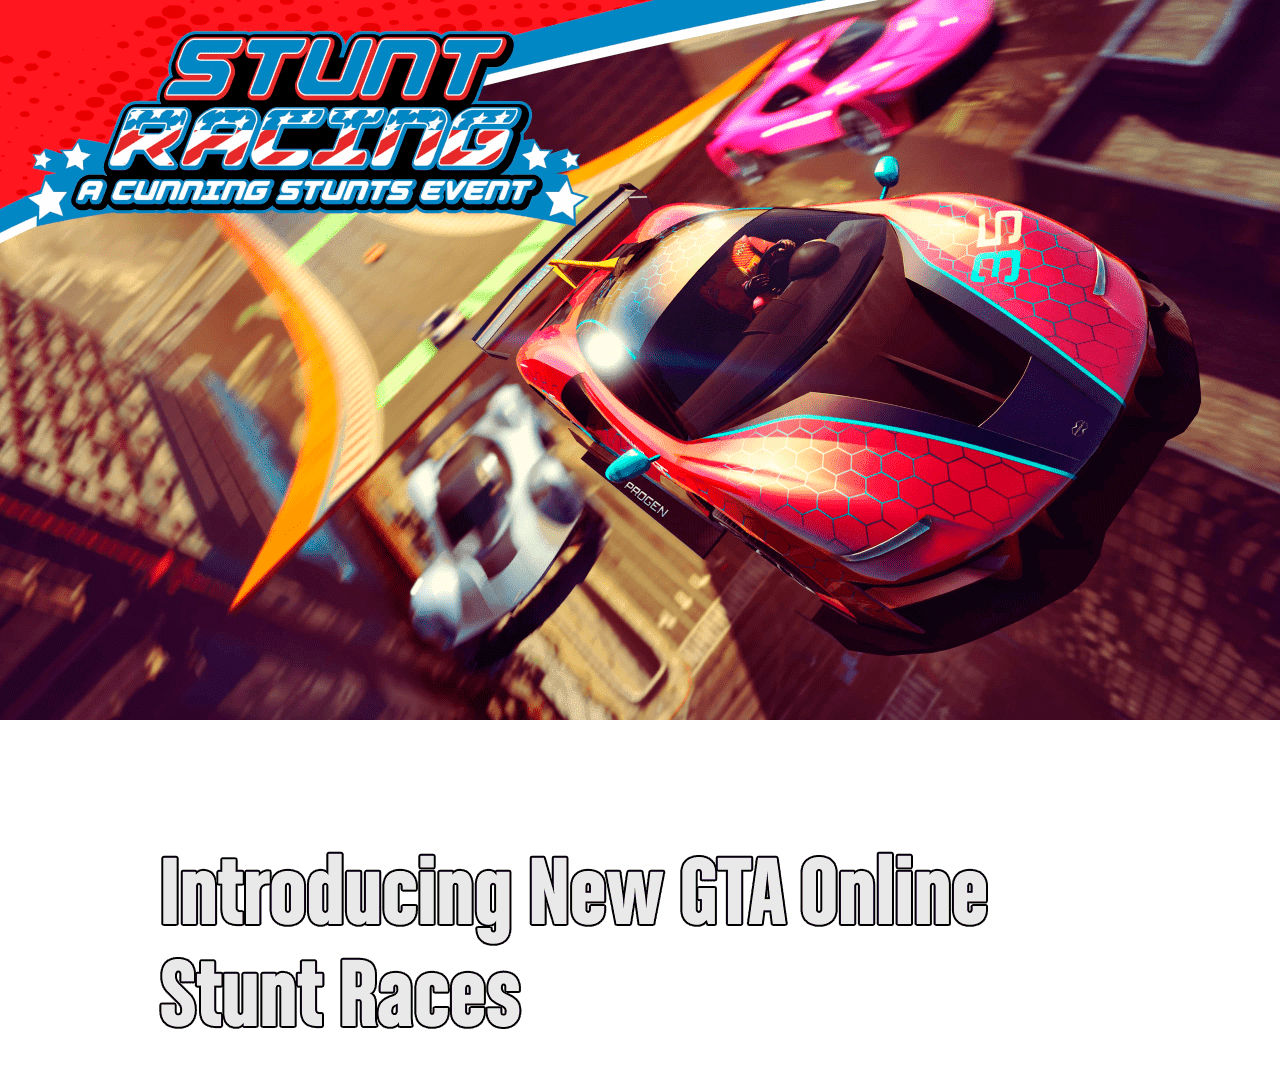 Stunt Racing: A Cunning Stunts Event — Introducing New GTA Online Stunt Races